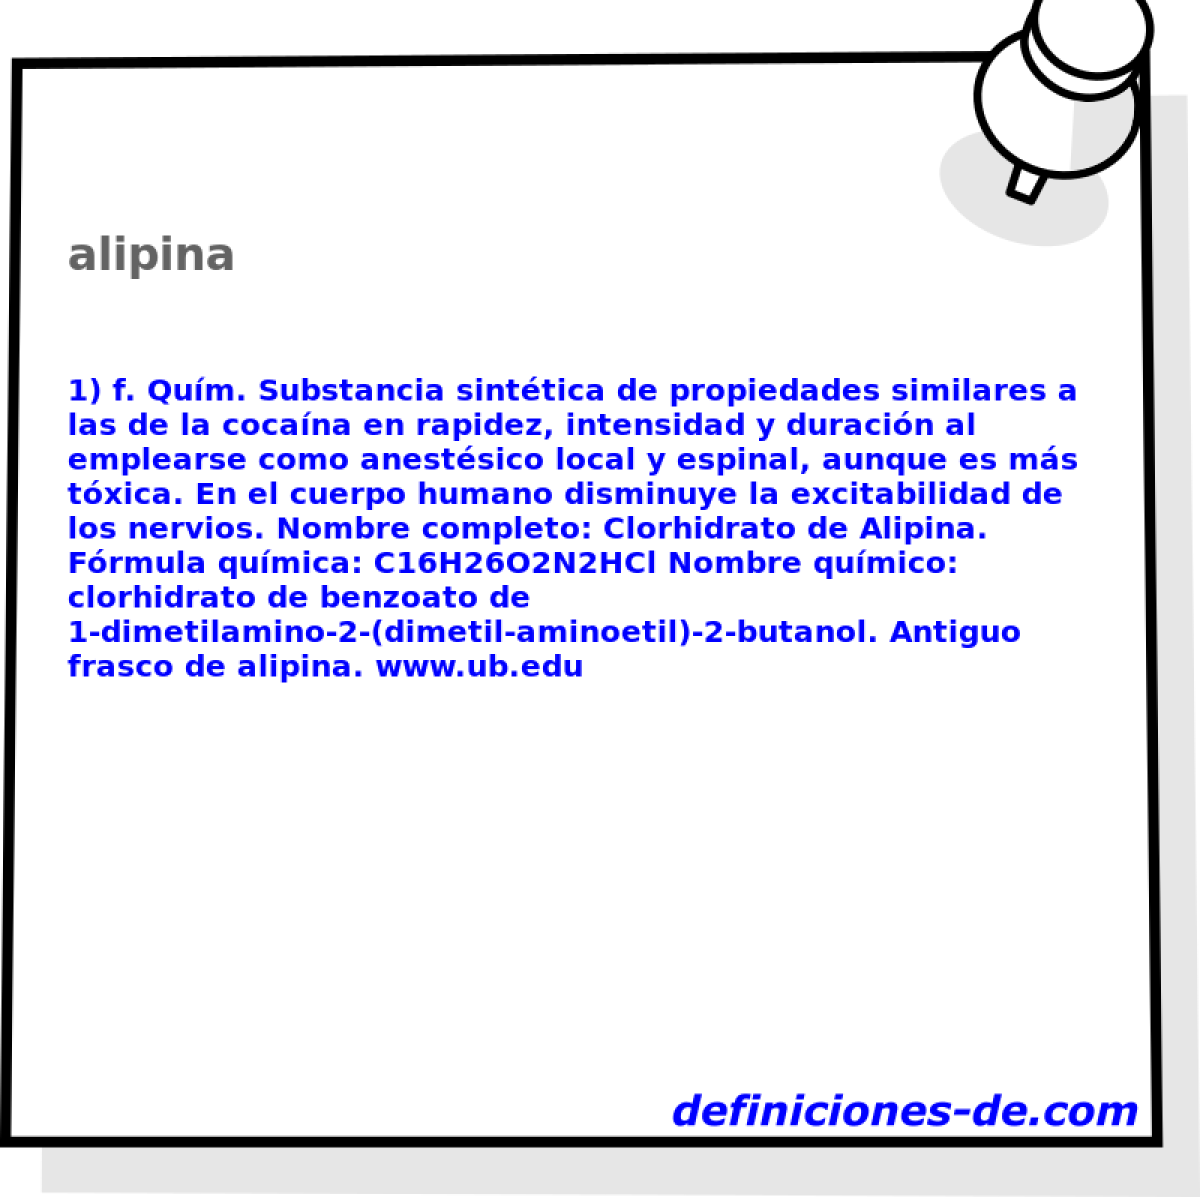 alipina 